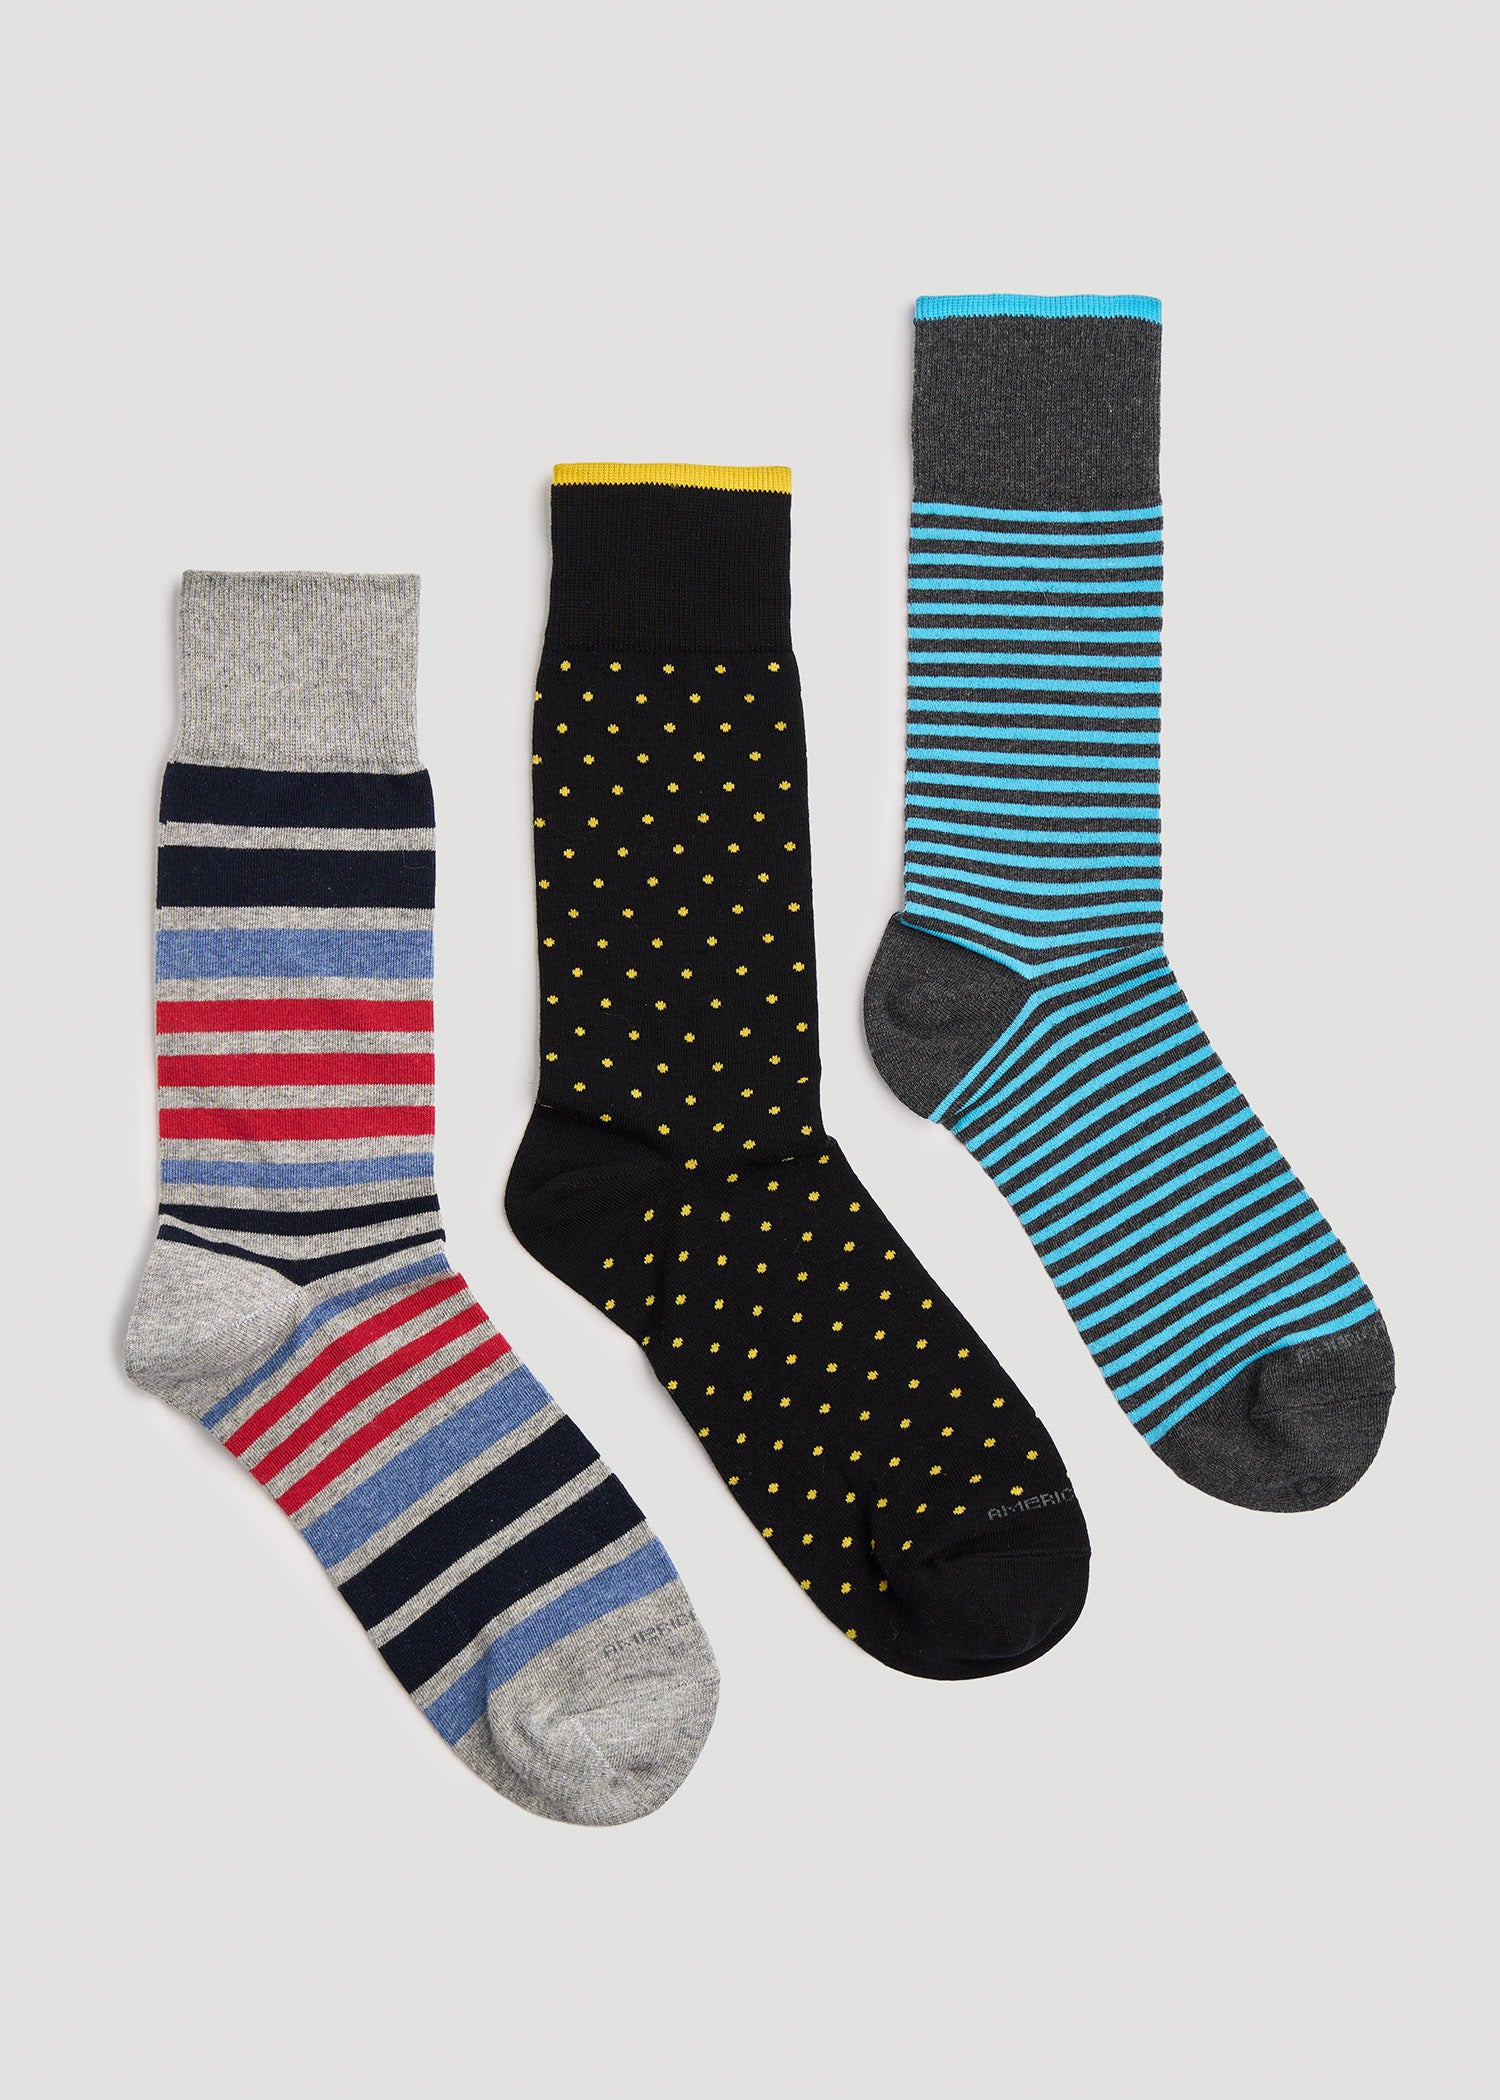 mens dress socks size 13 15